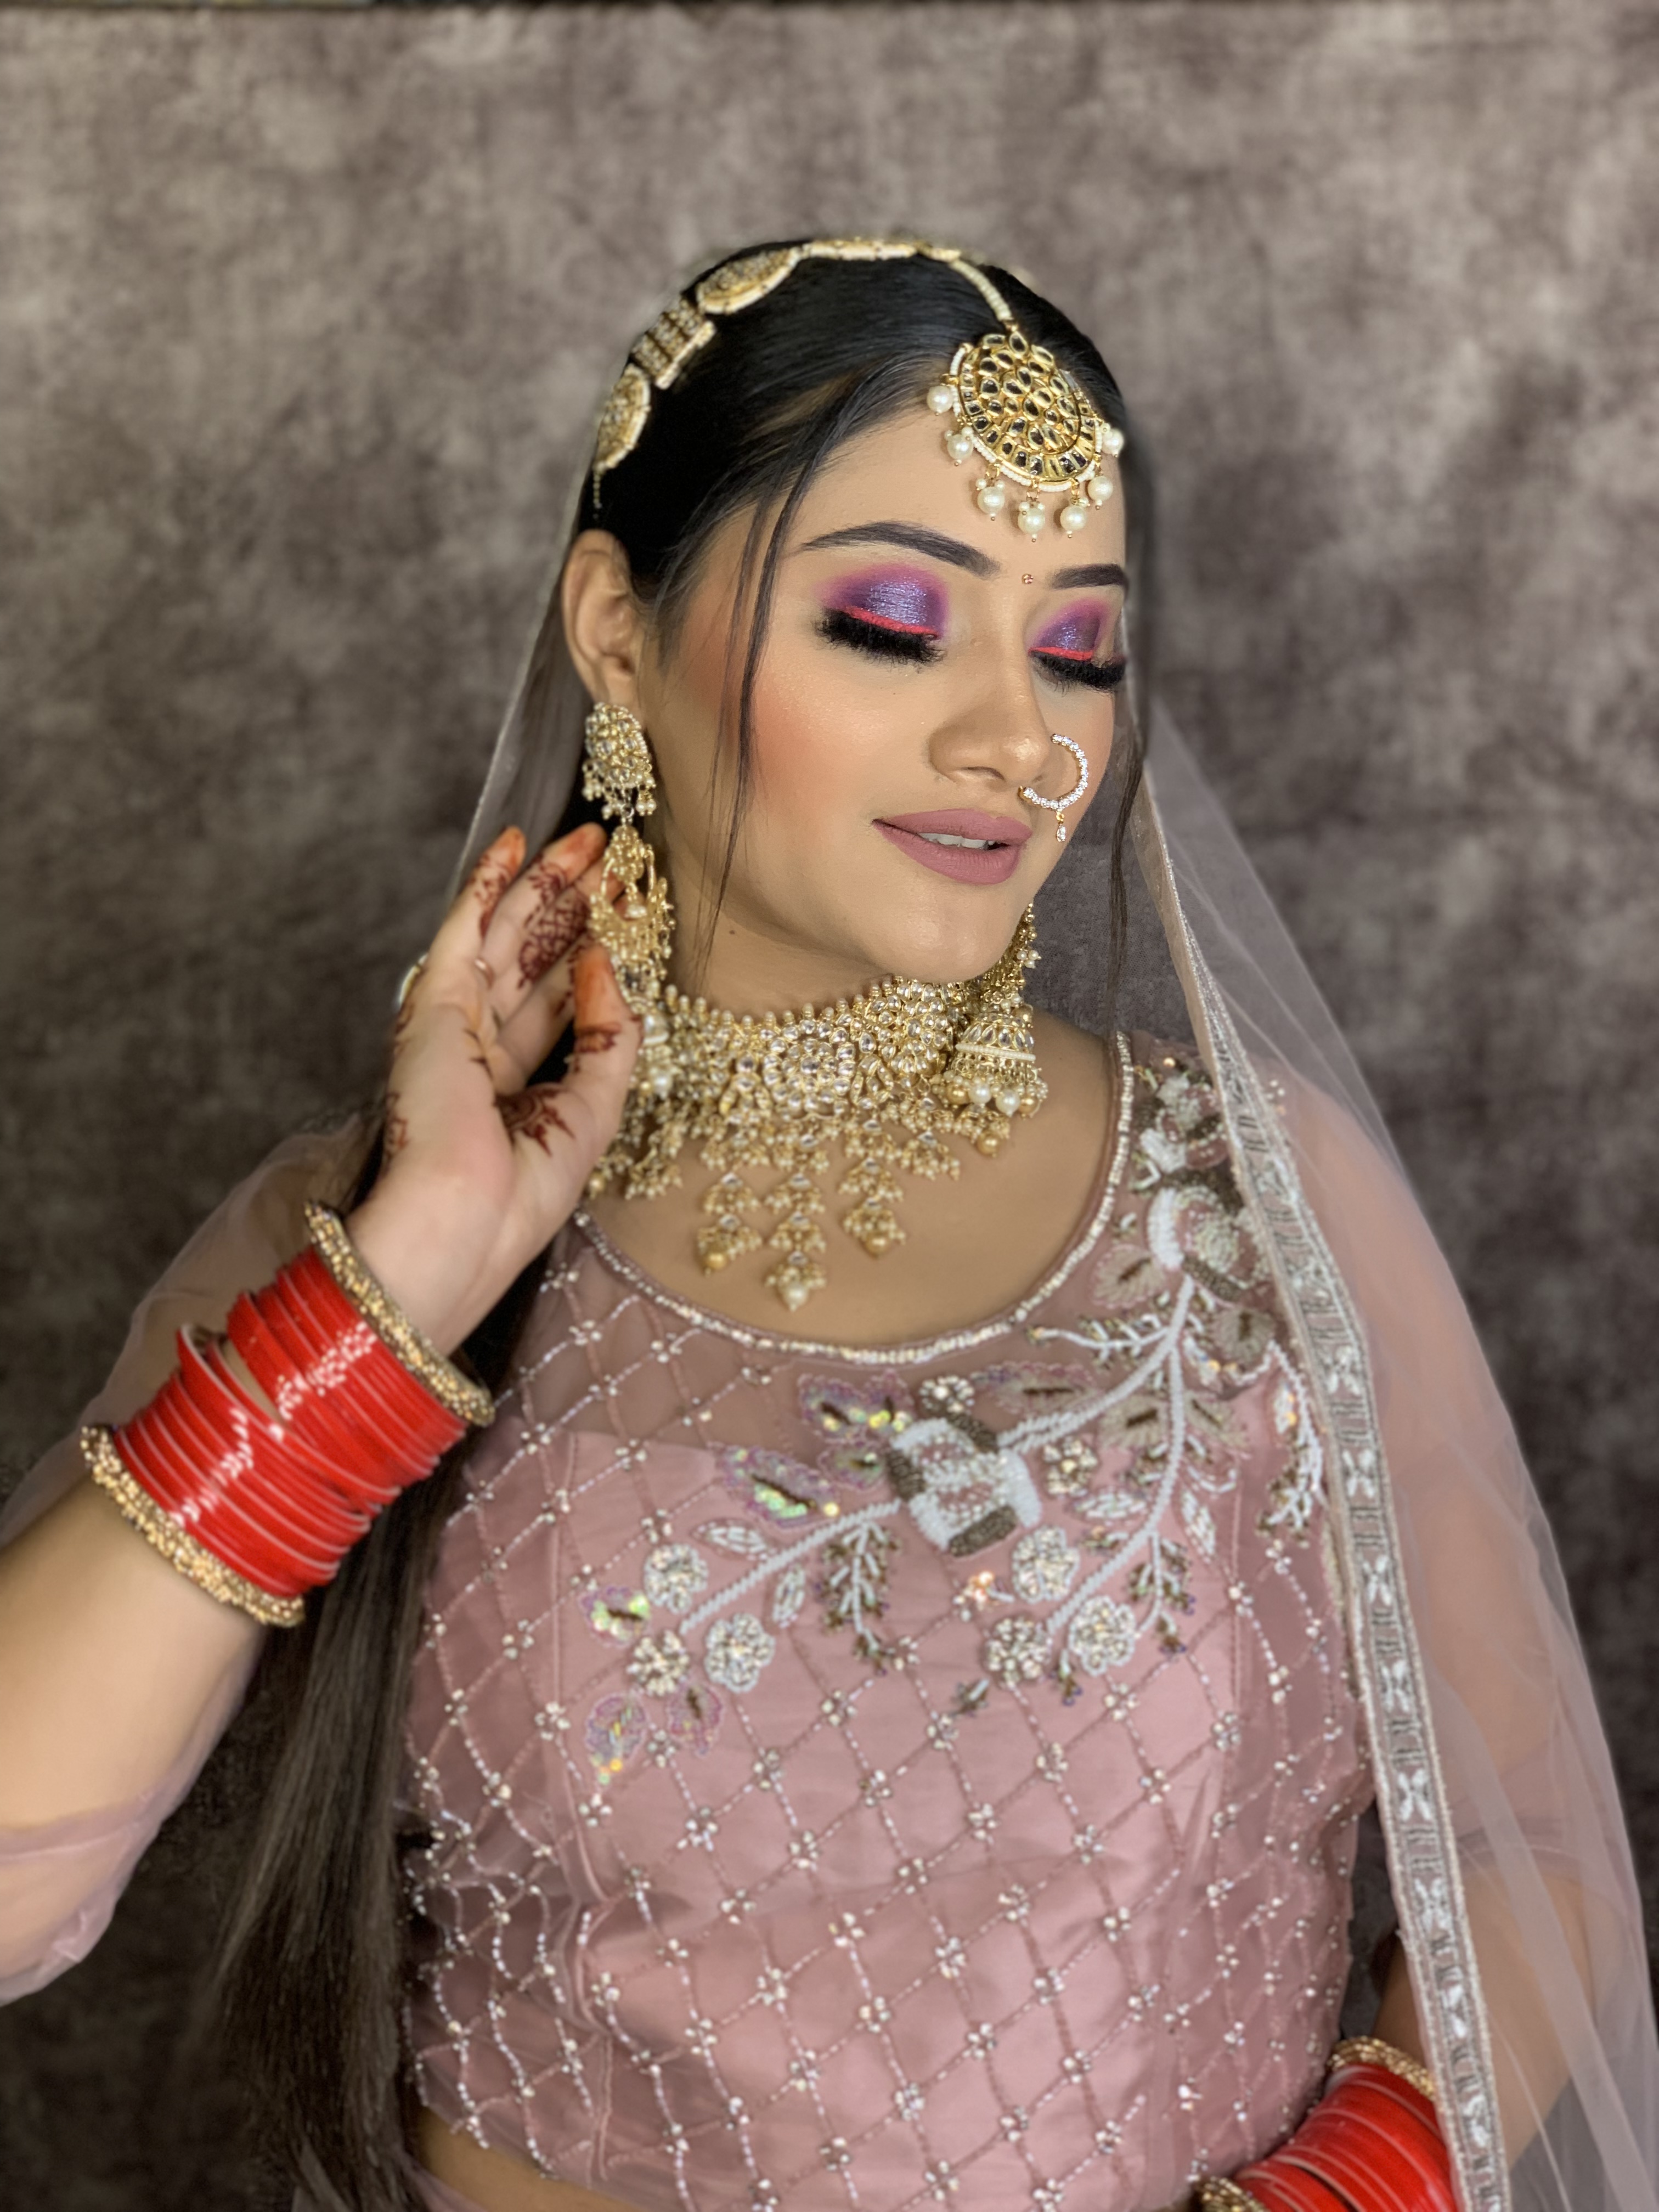 rajnish-chouhan-makeup-artist-delhi-ncr